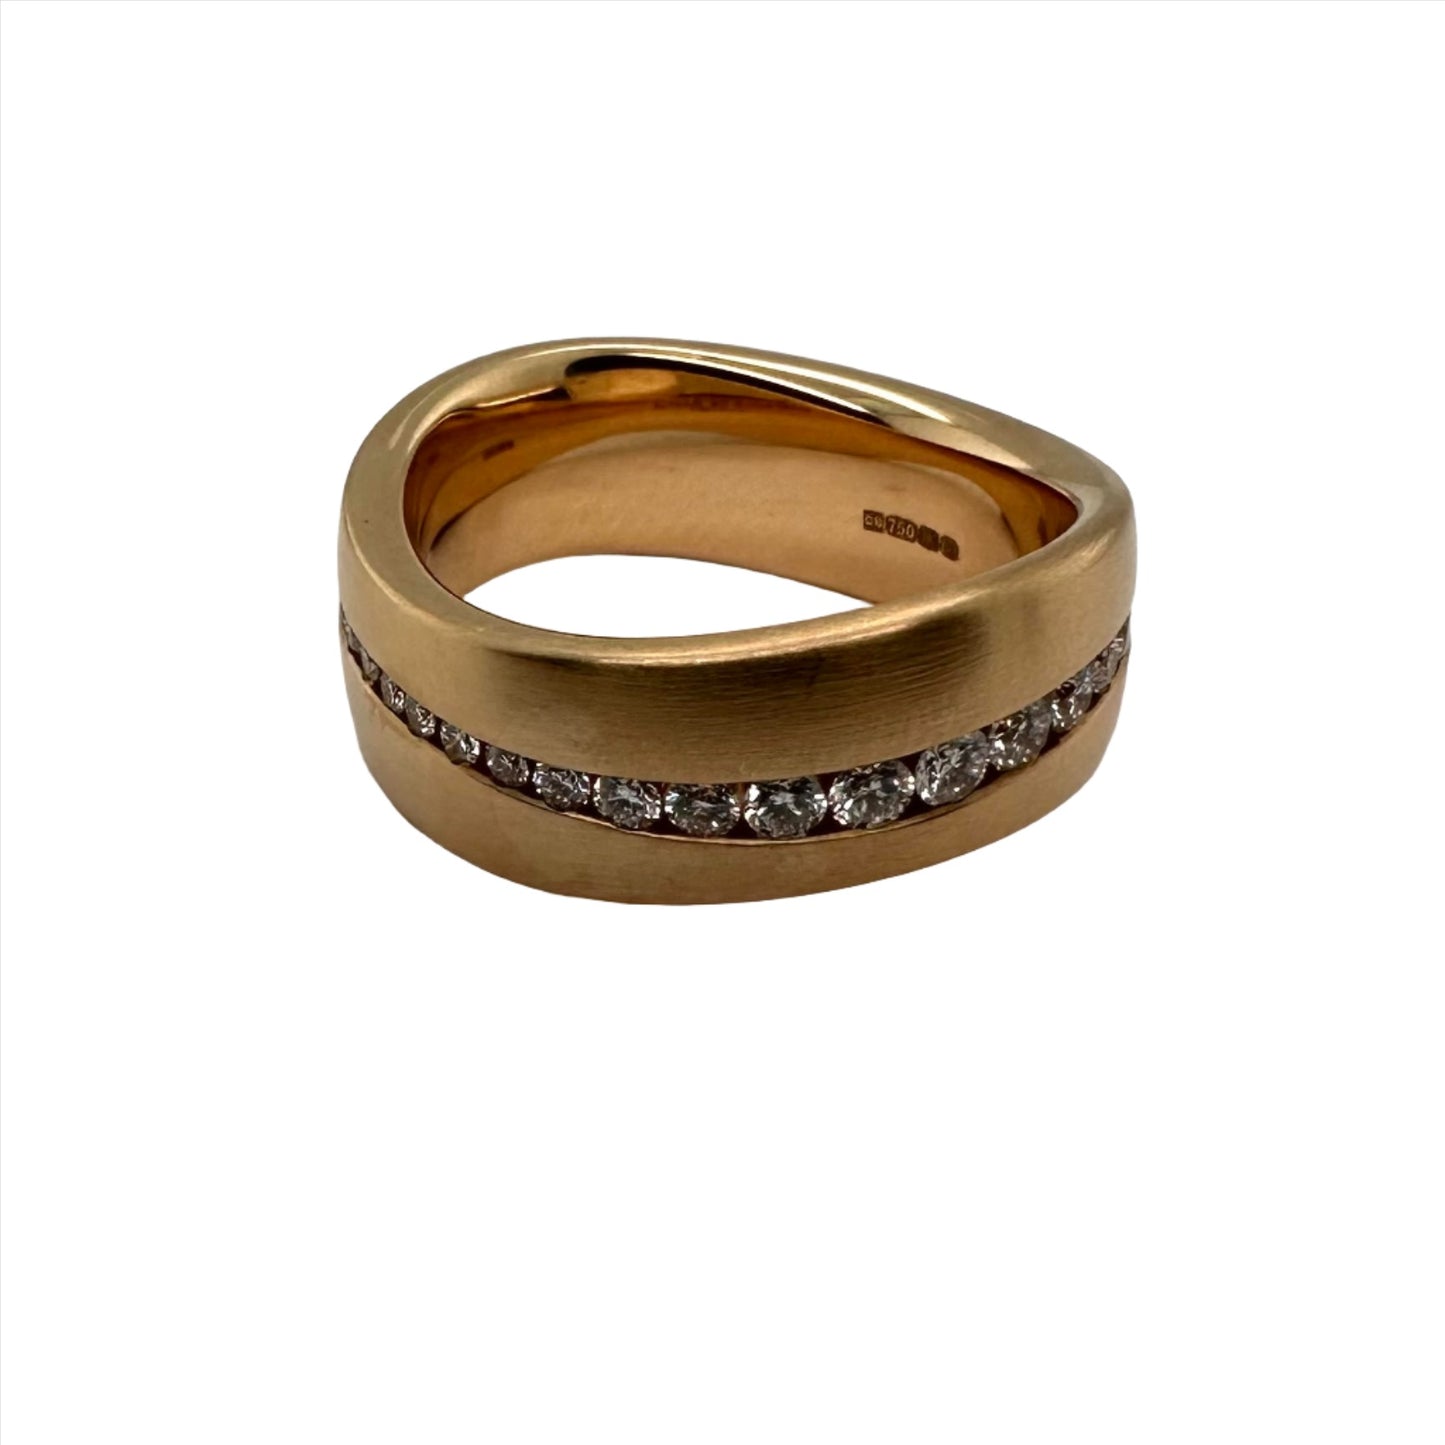 6.5mm wide diamond set ring